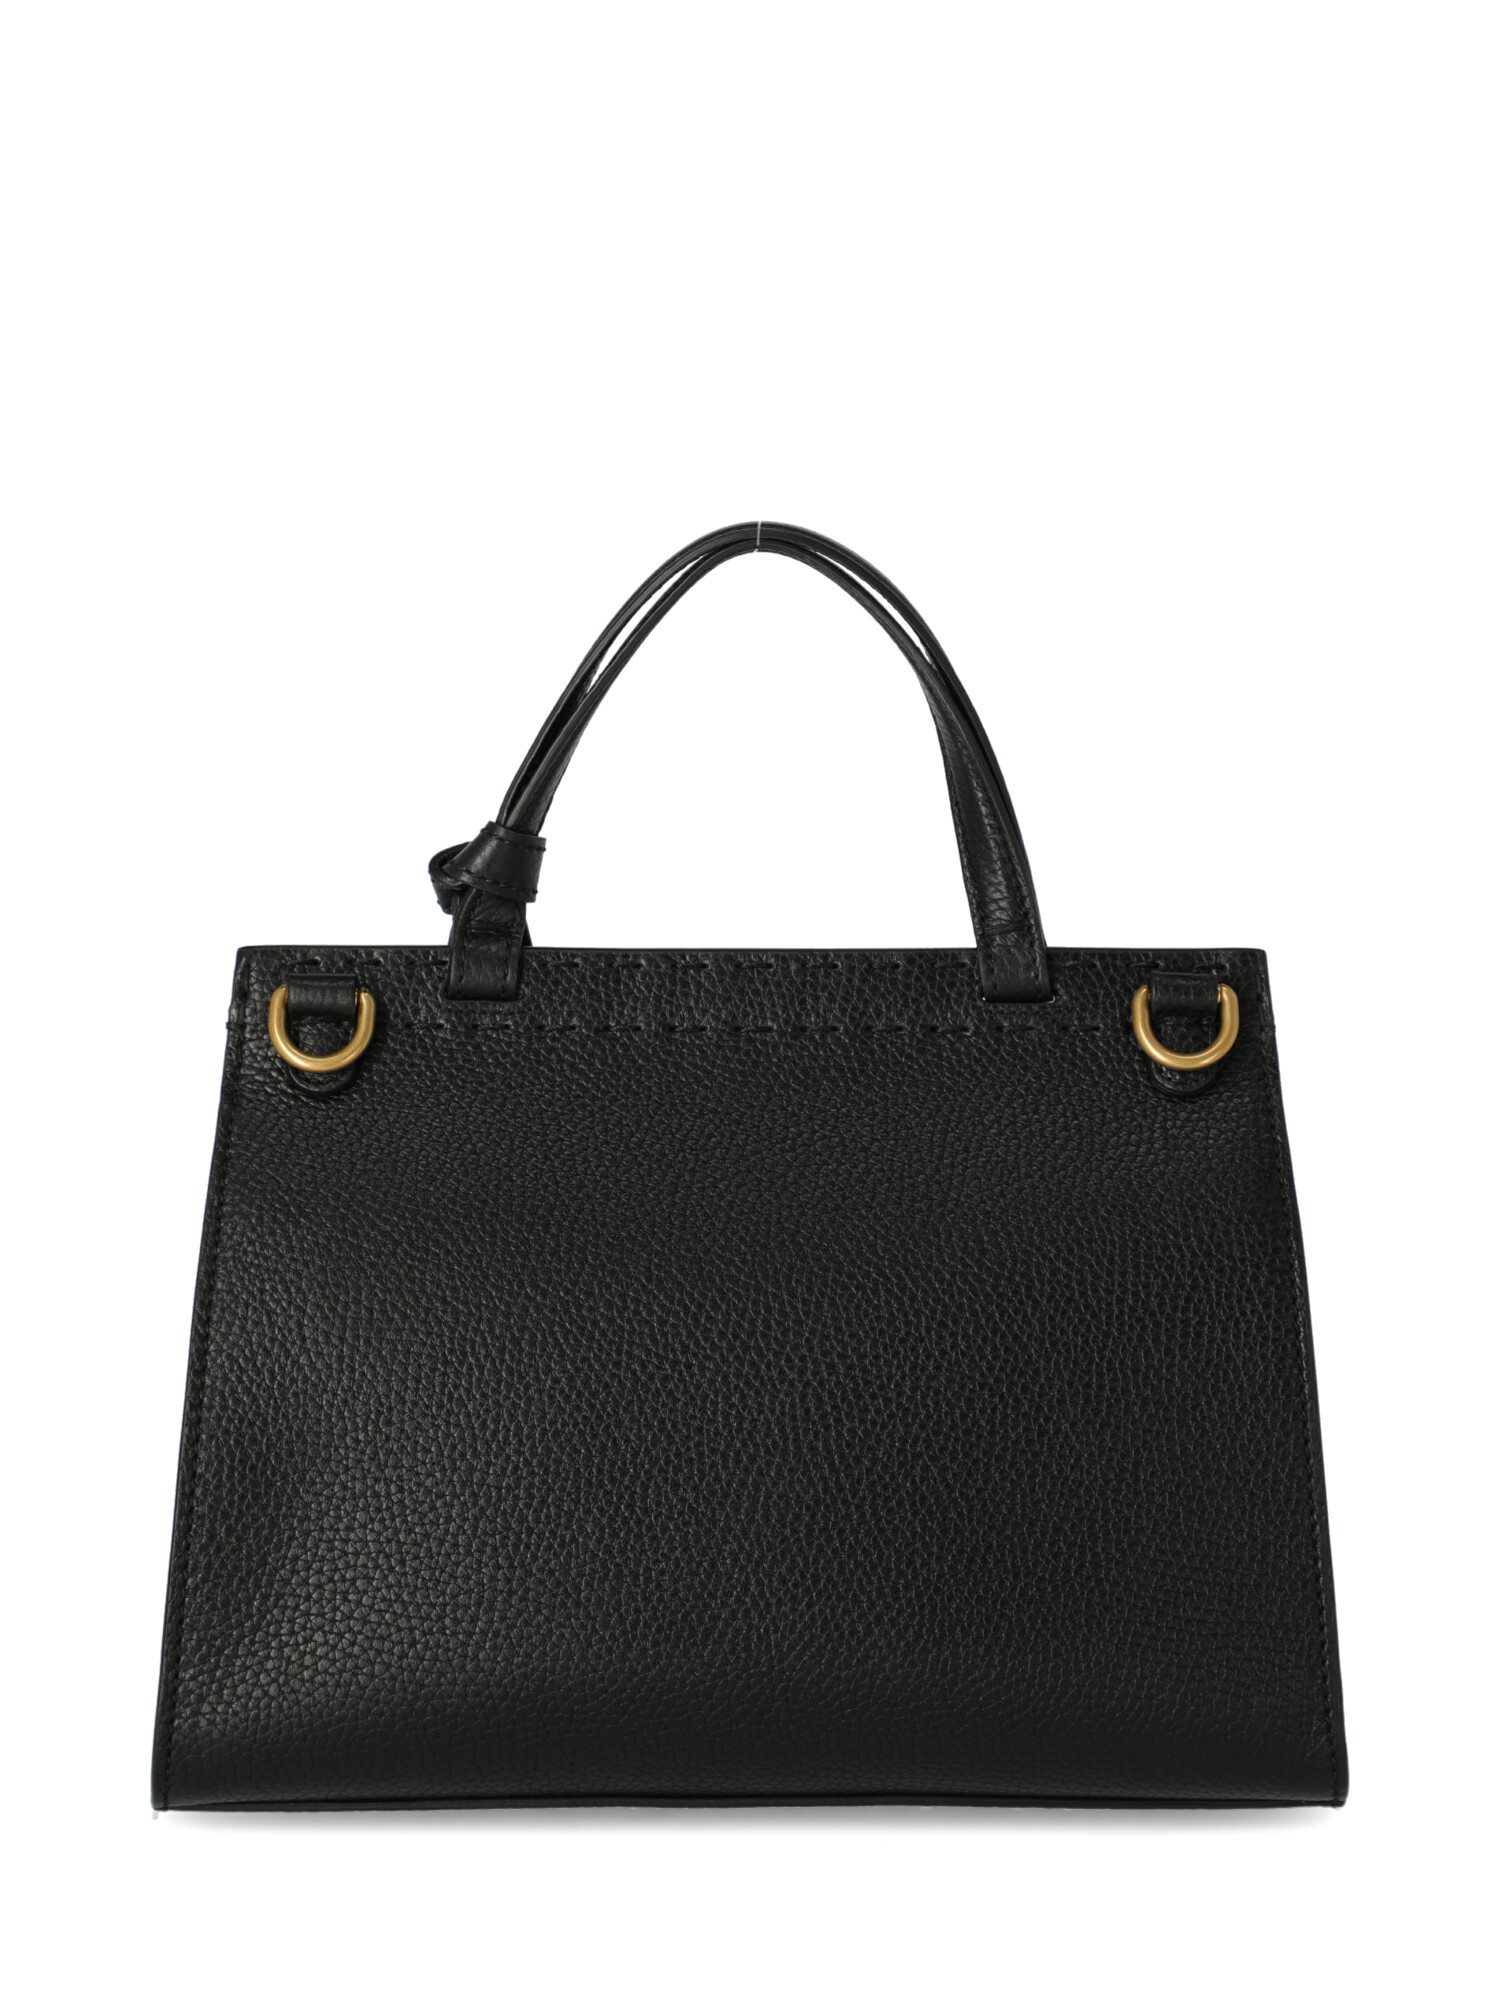 Gucci Special Price Women Handbags Marmont Black | eBay